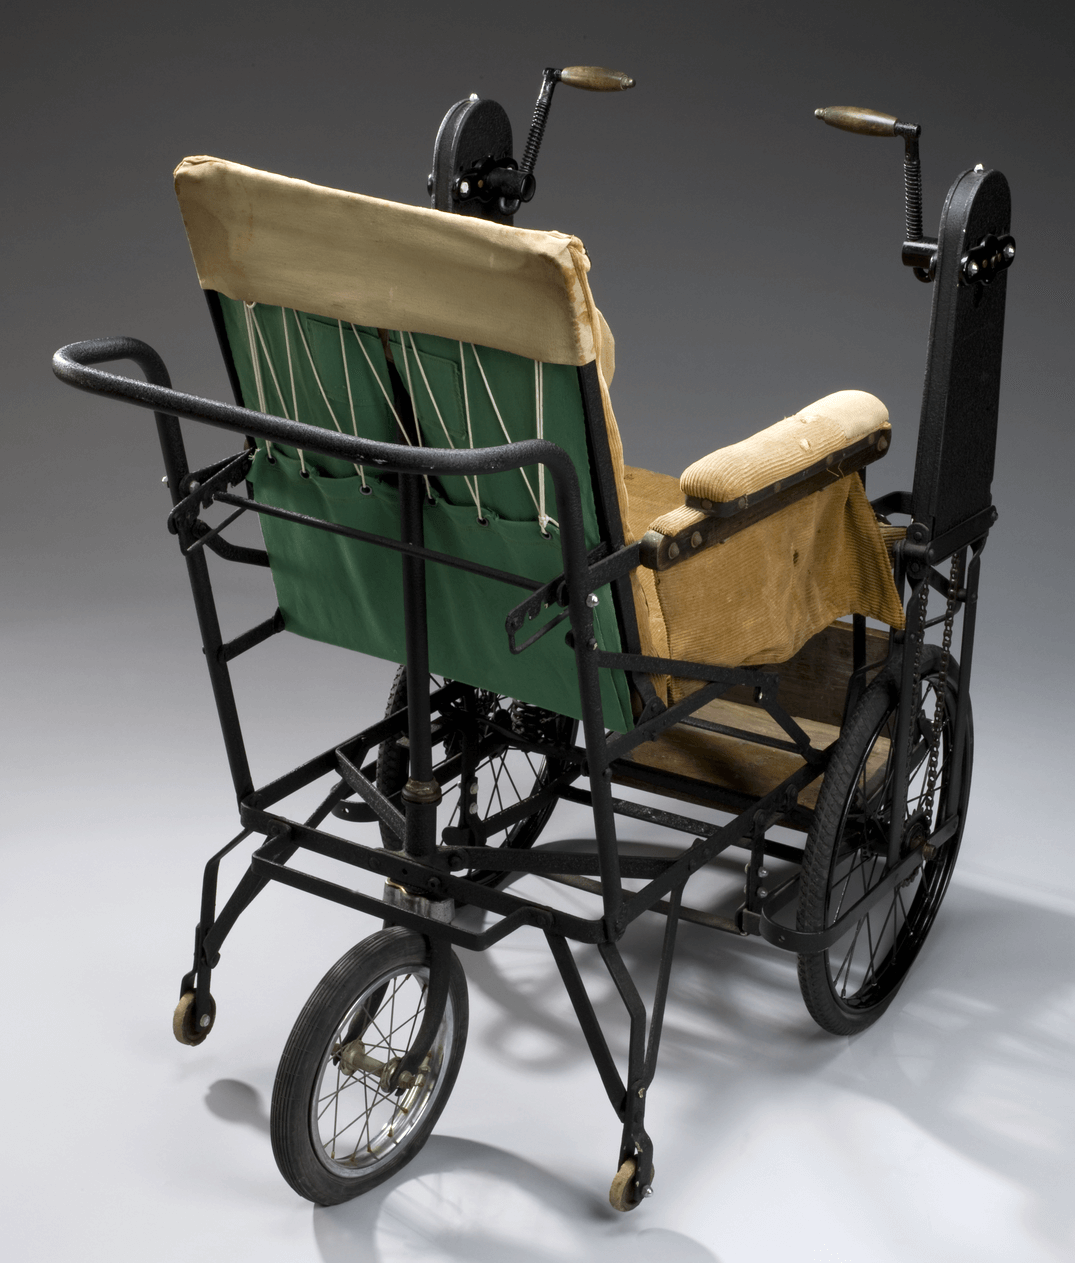 A hand-cranked wheelchair build between 1920-20